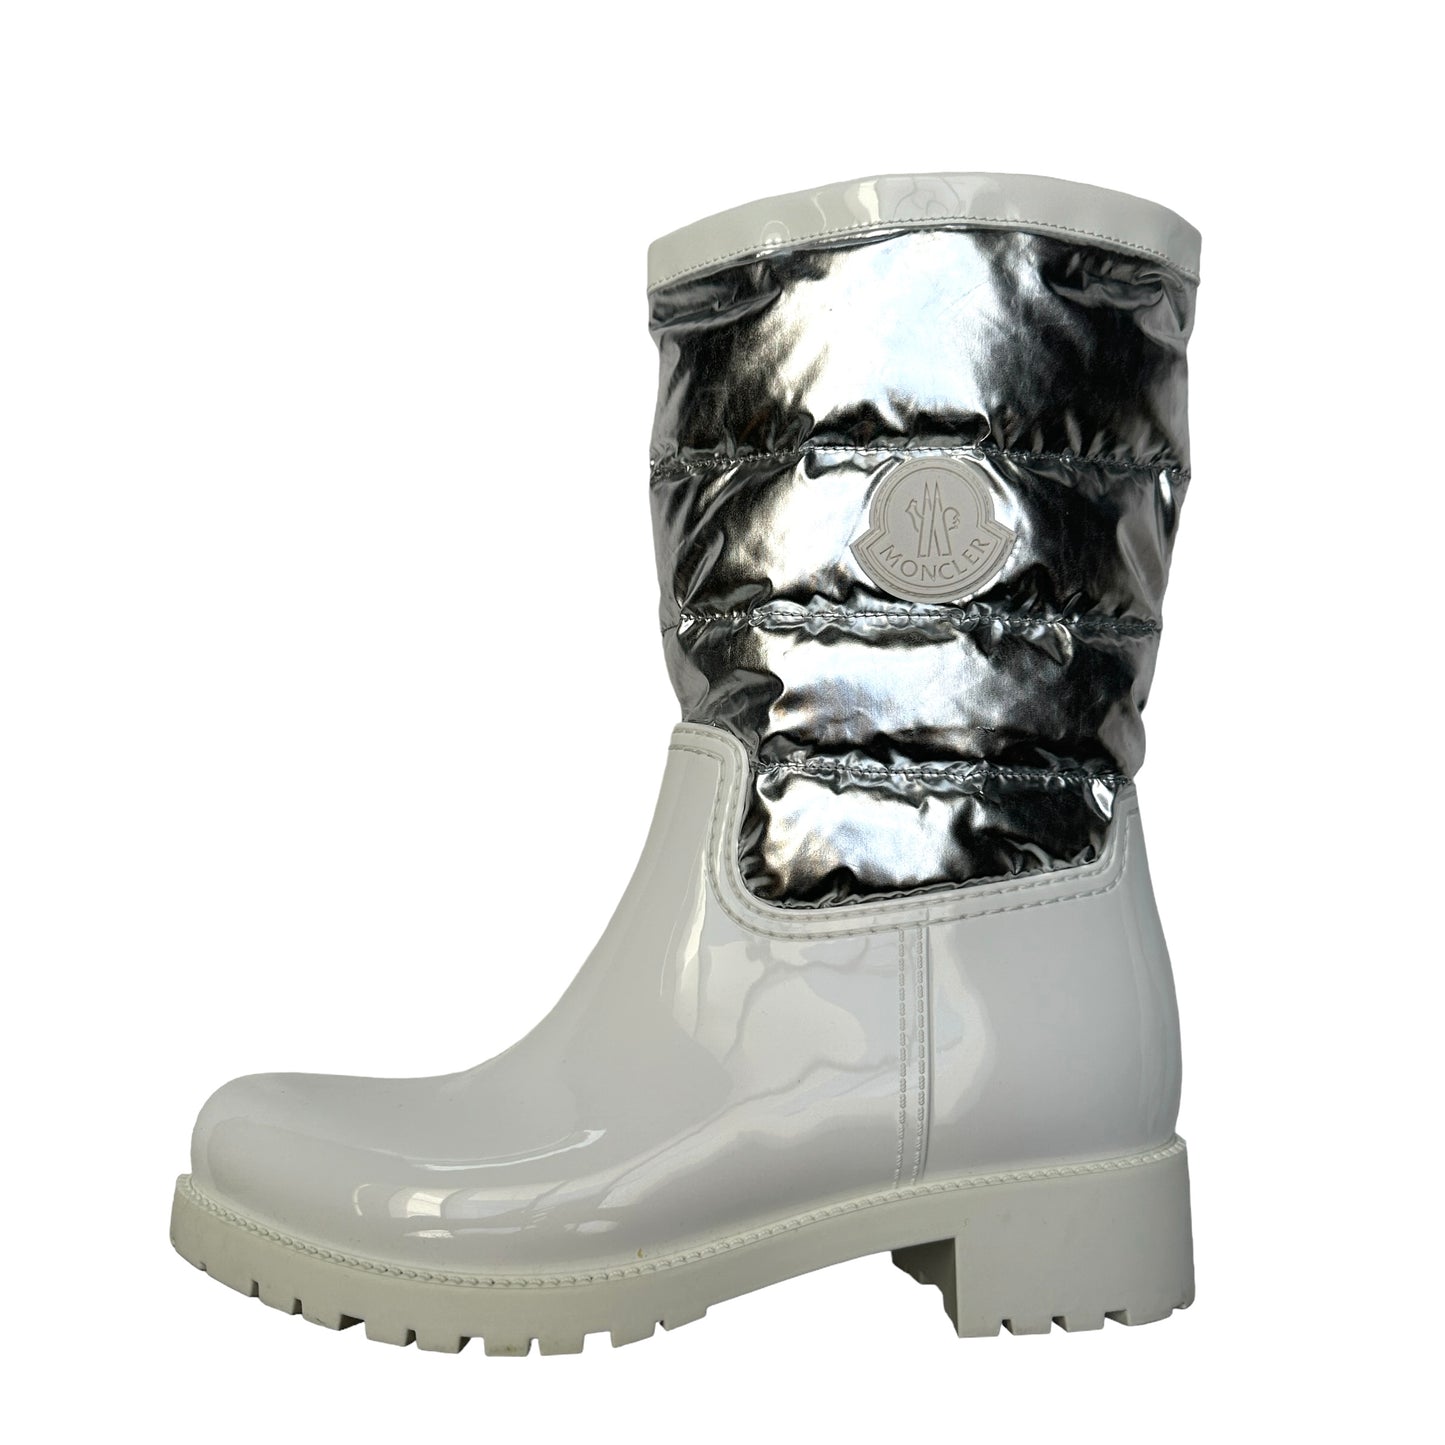 White & Silver Logo Rain Boots - 8